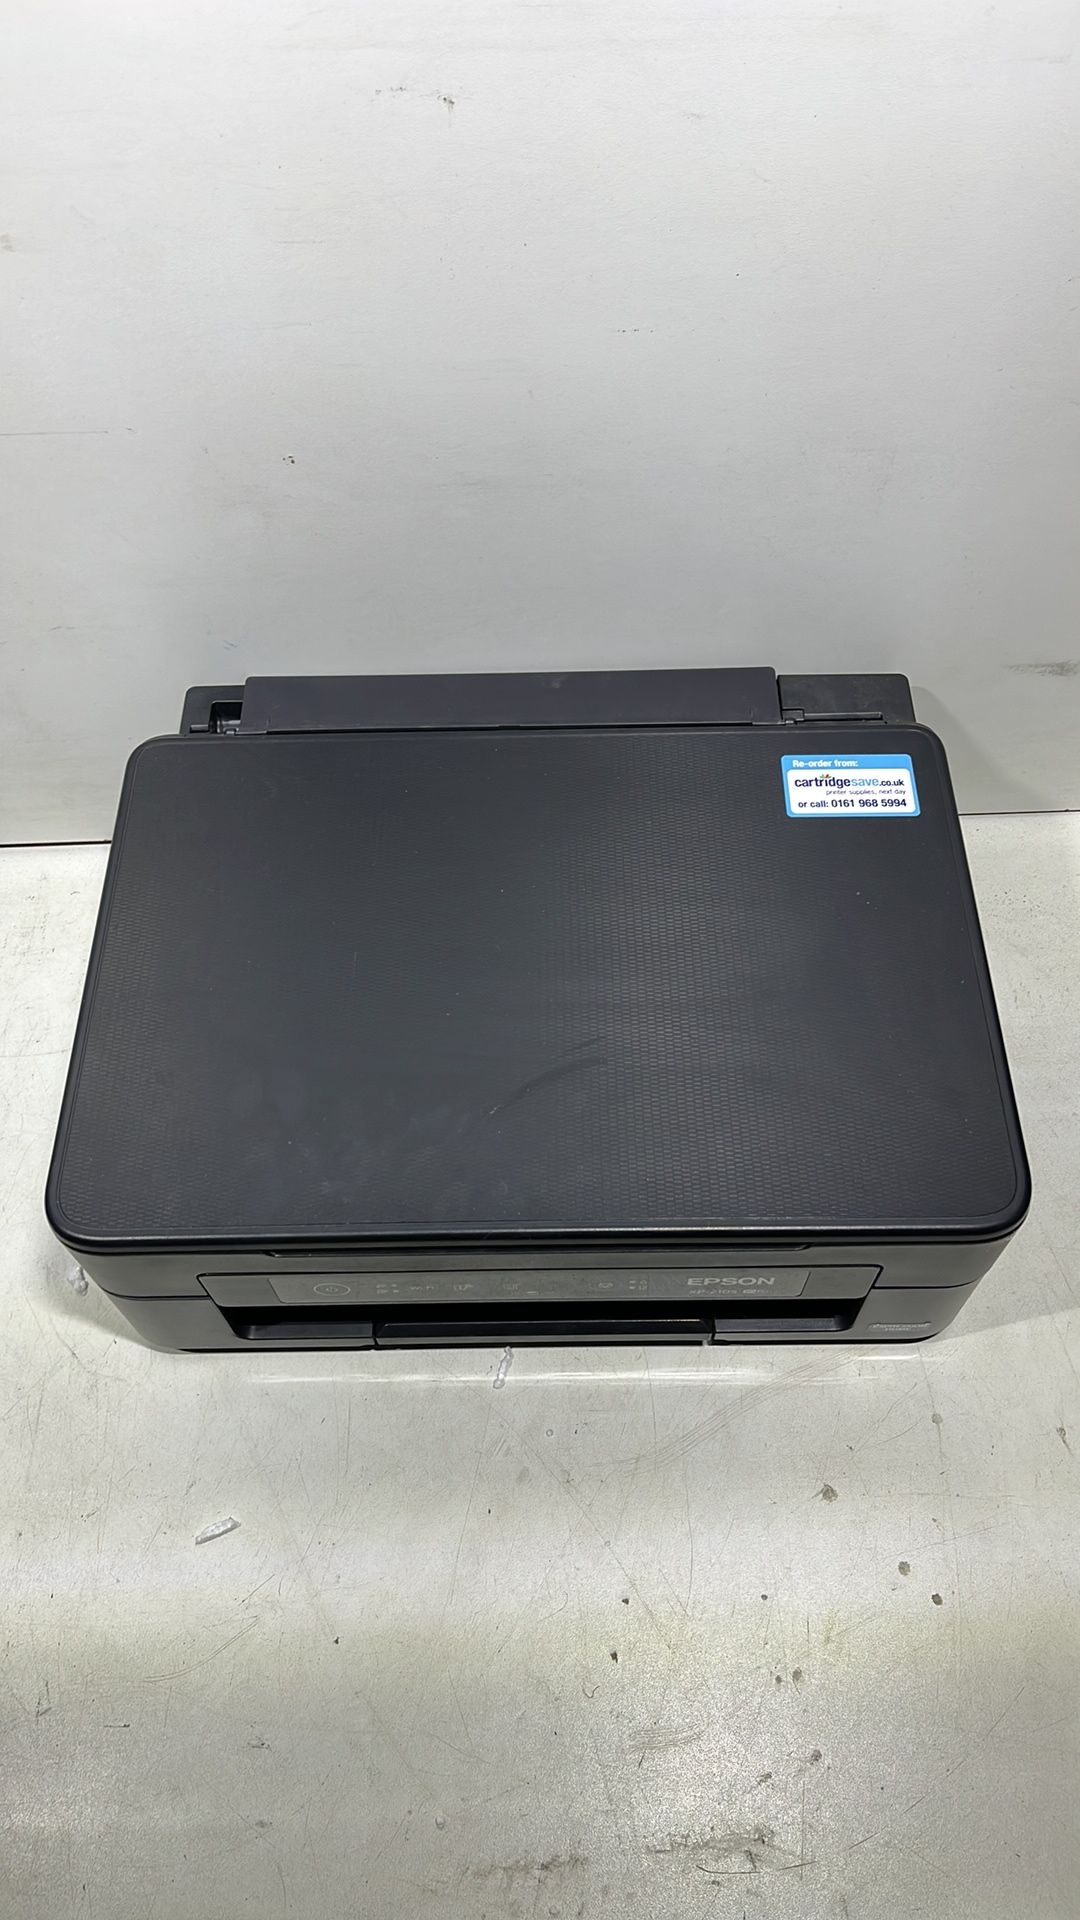 Epson XP-2105 Multifunctional Printer - Image 2 of 5